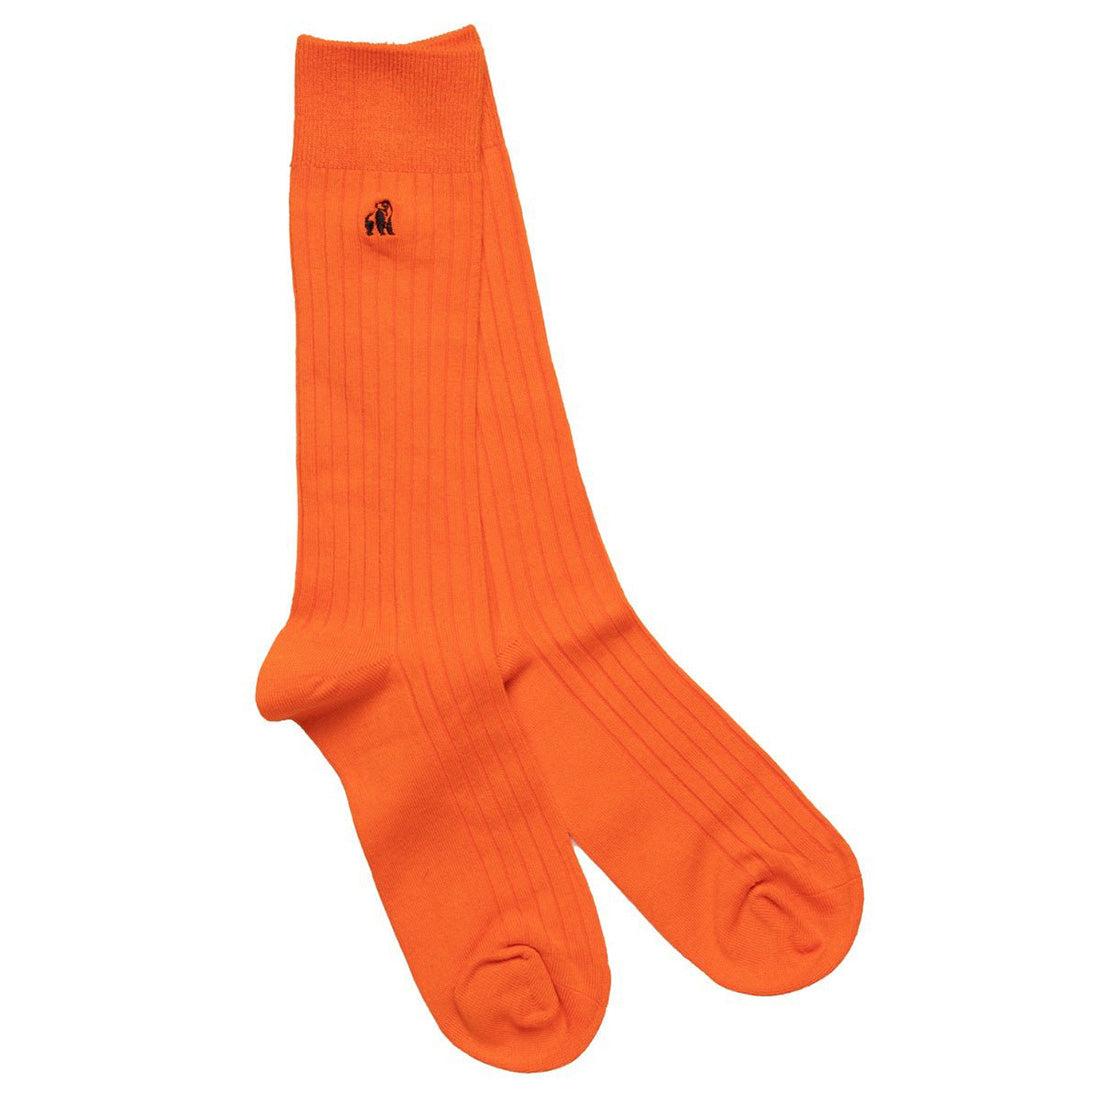 socks-tangerine-orange-bamboo-socks-1.jpg